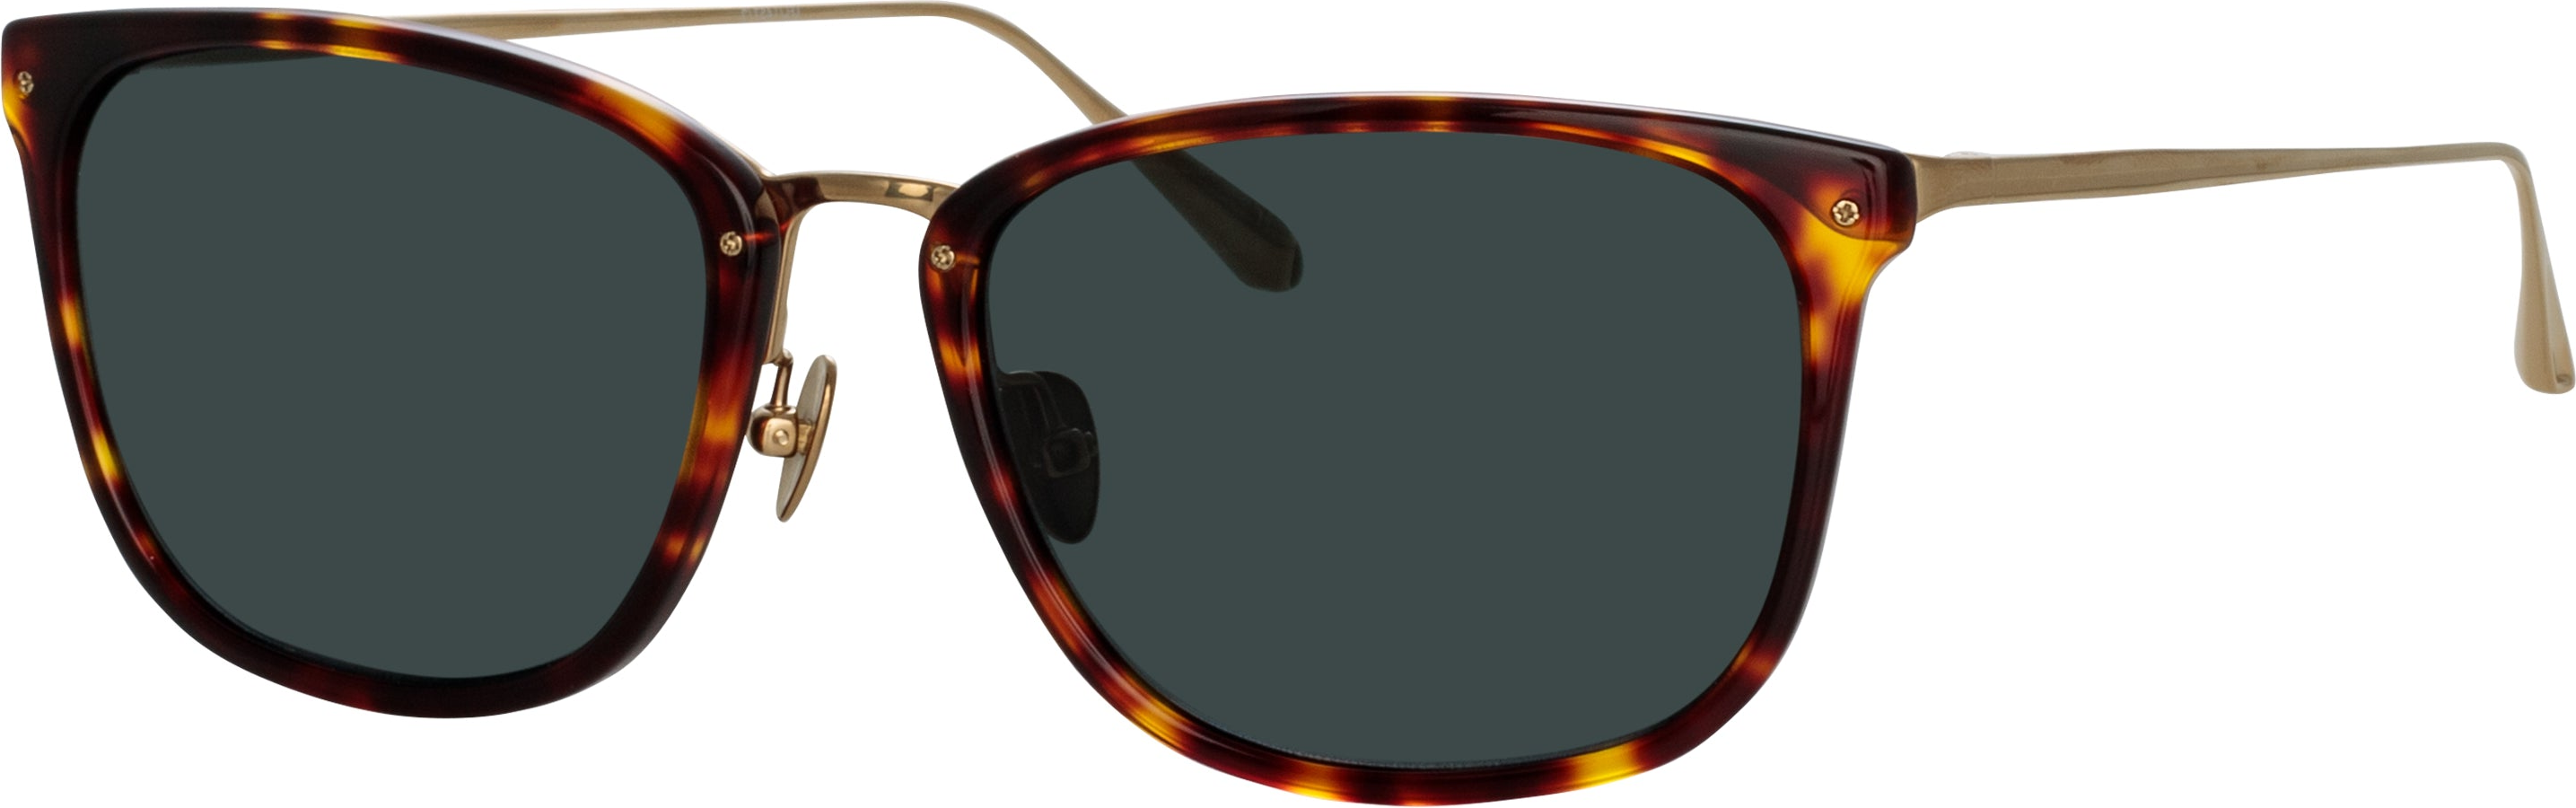 Color_LFL1457C2SUN - Cassin D-Frame Sunglasses in Tortoiseshell